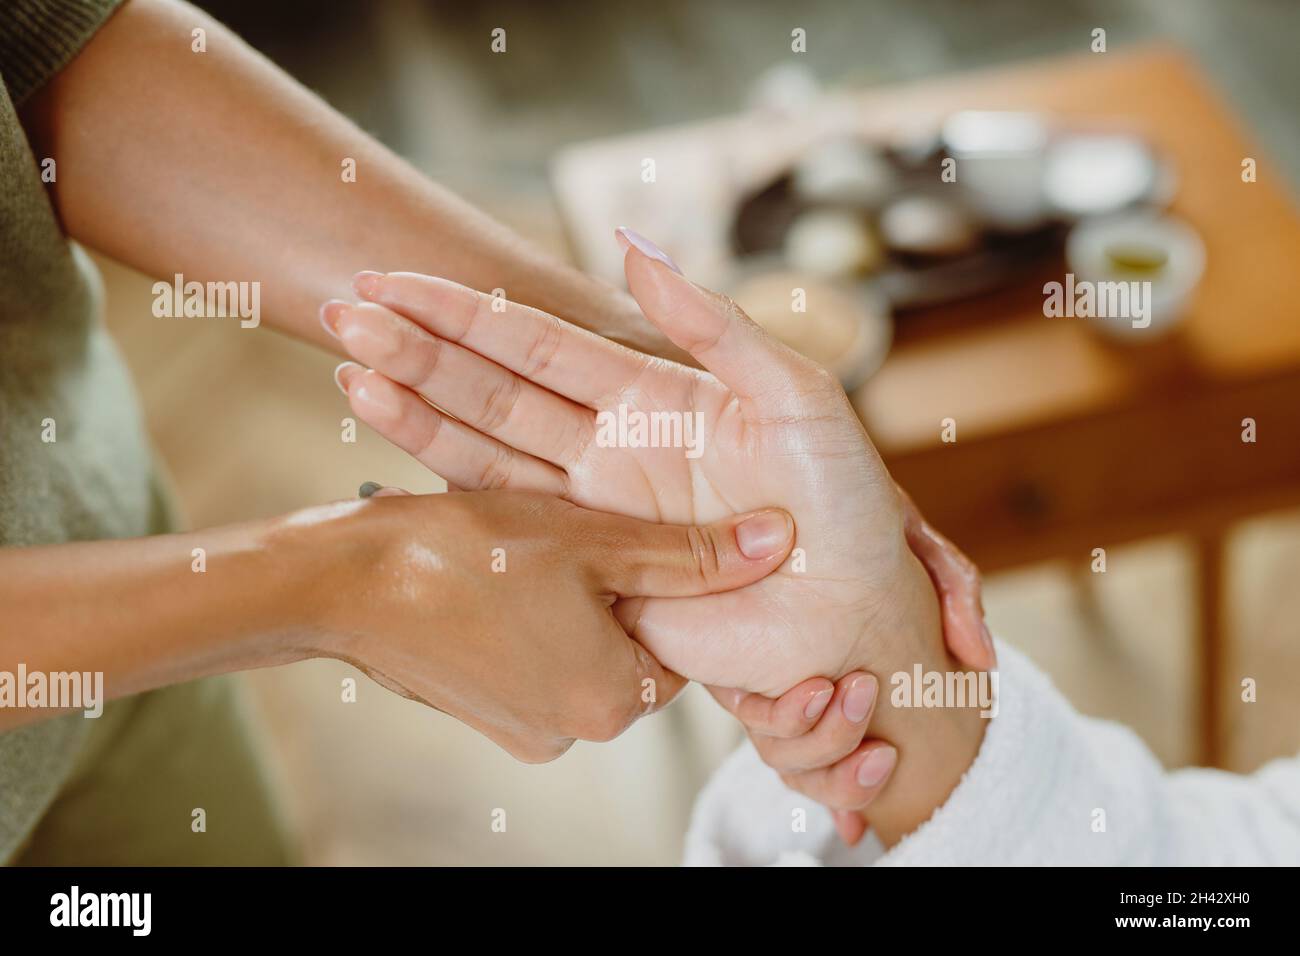 Female receiving hand massage at health spa salon. Stock Photo